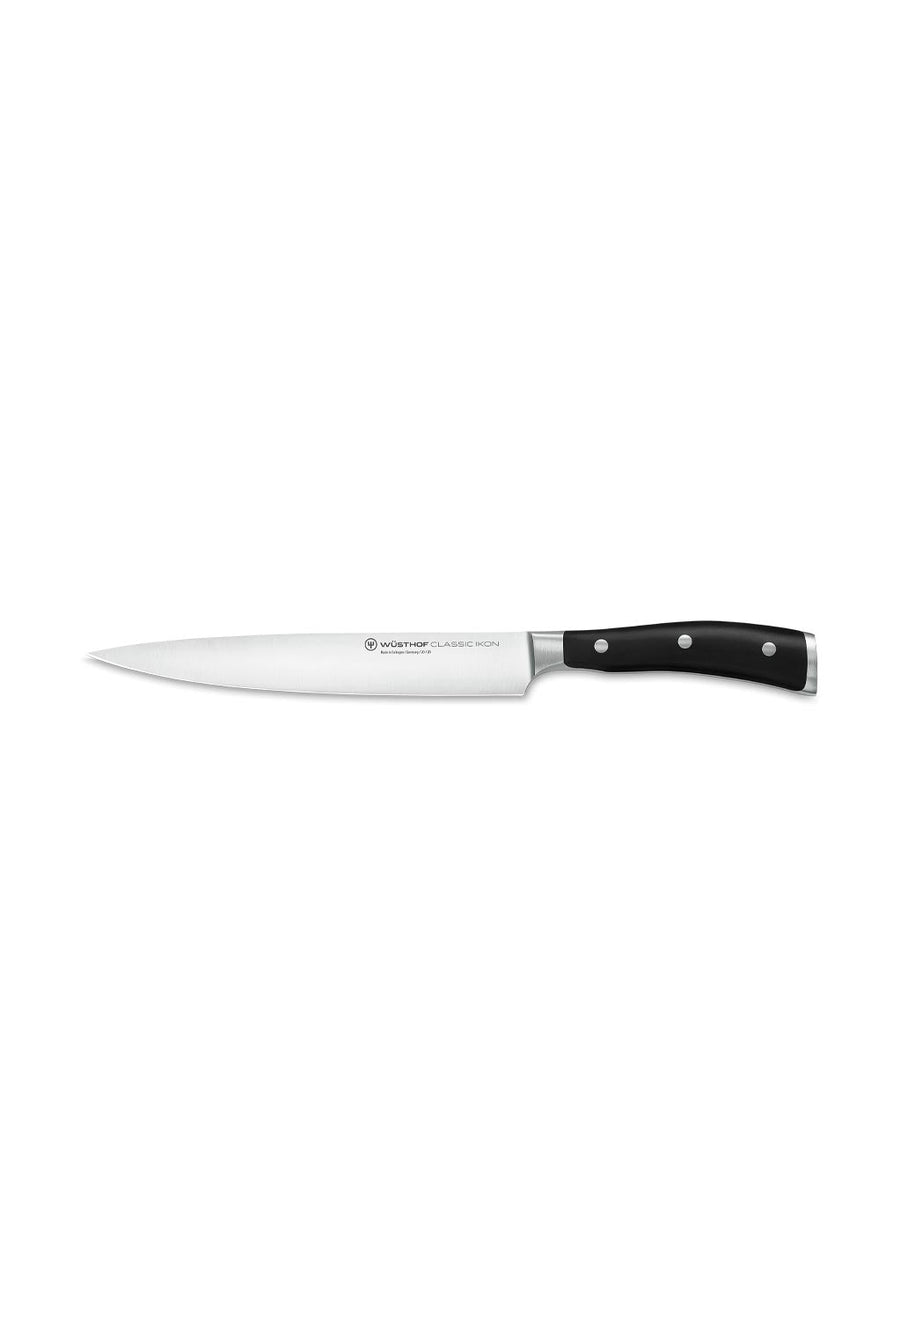 Wusthof Classic Ikon Carving knife